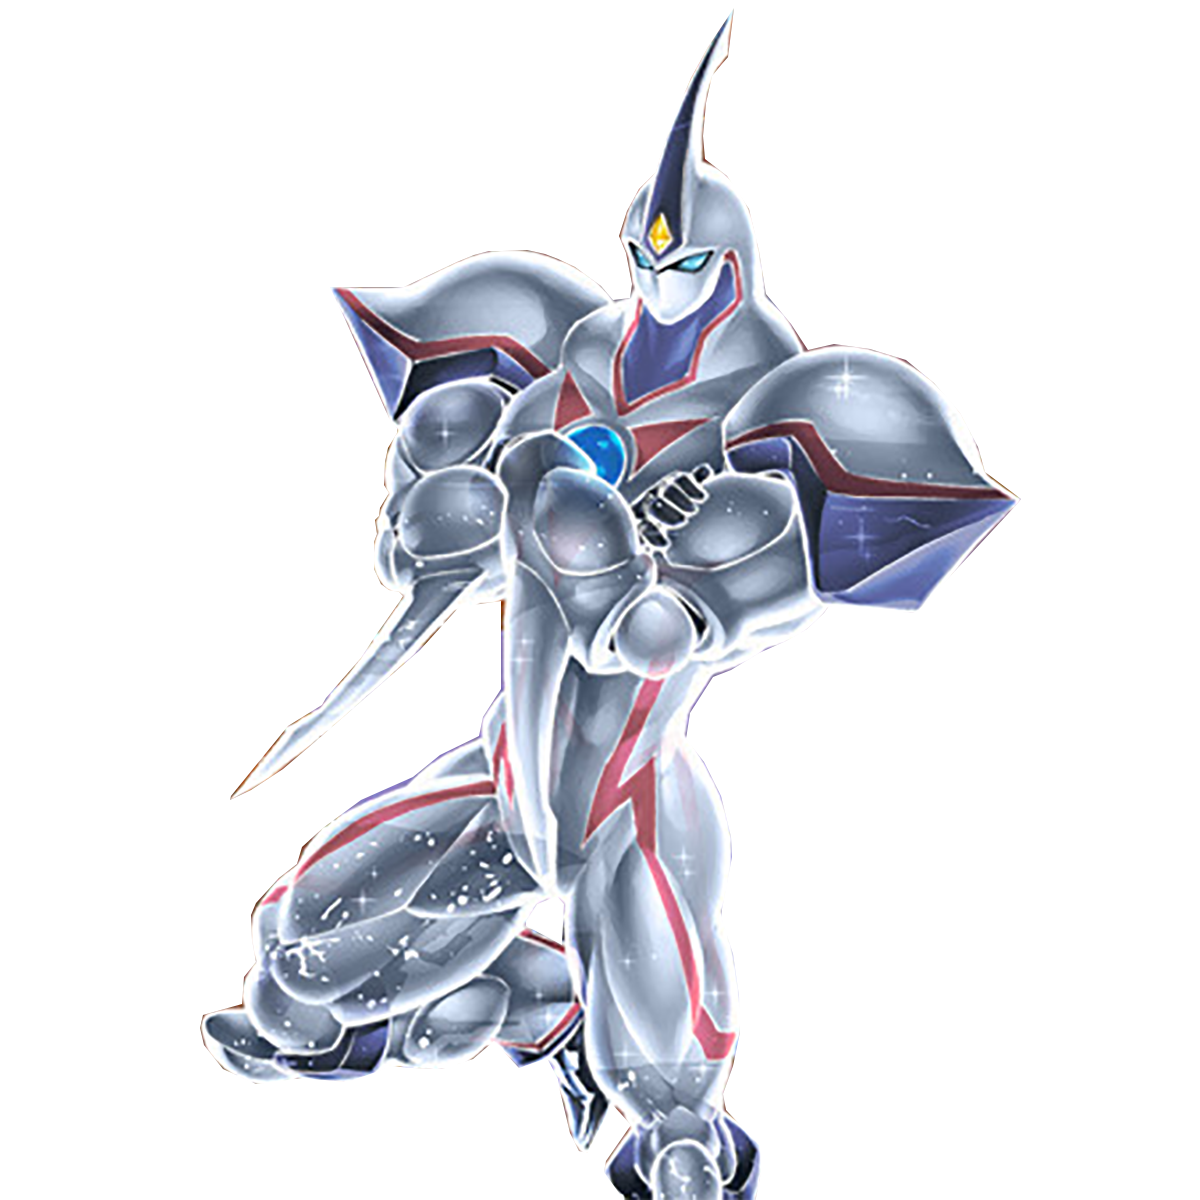 High-Spirited Hero with Elemental Powers / Anime 3 by sauliukazz on  DeviantArt